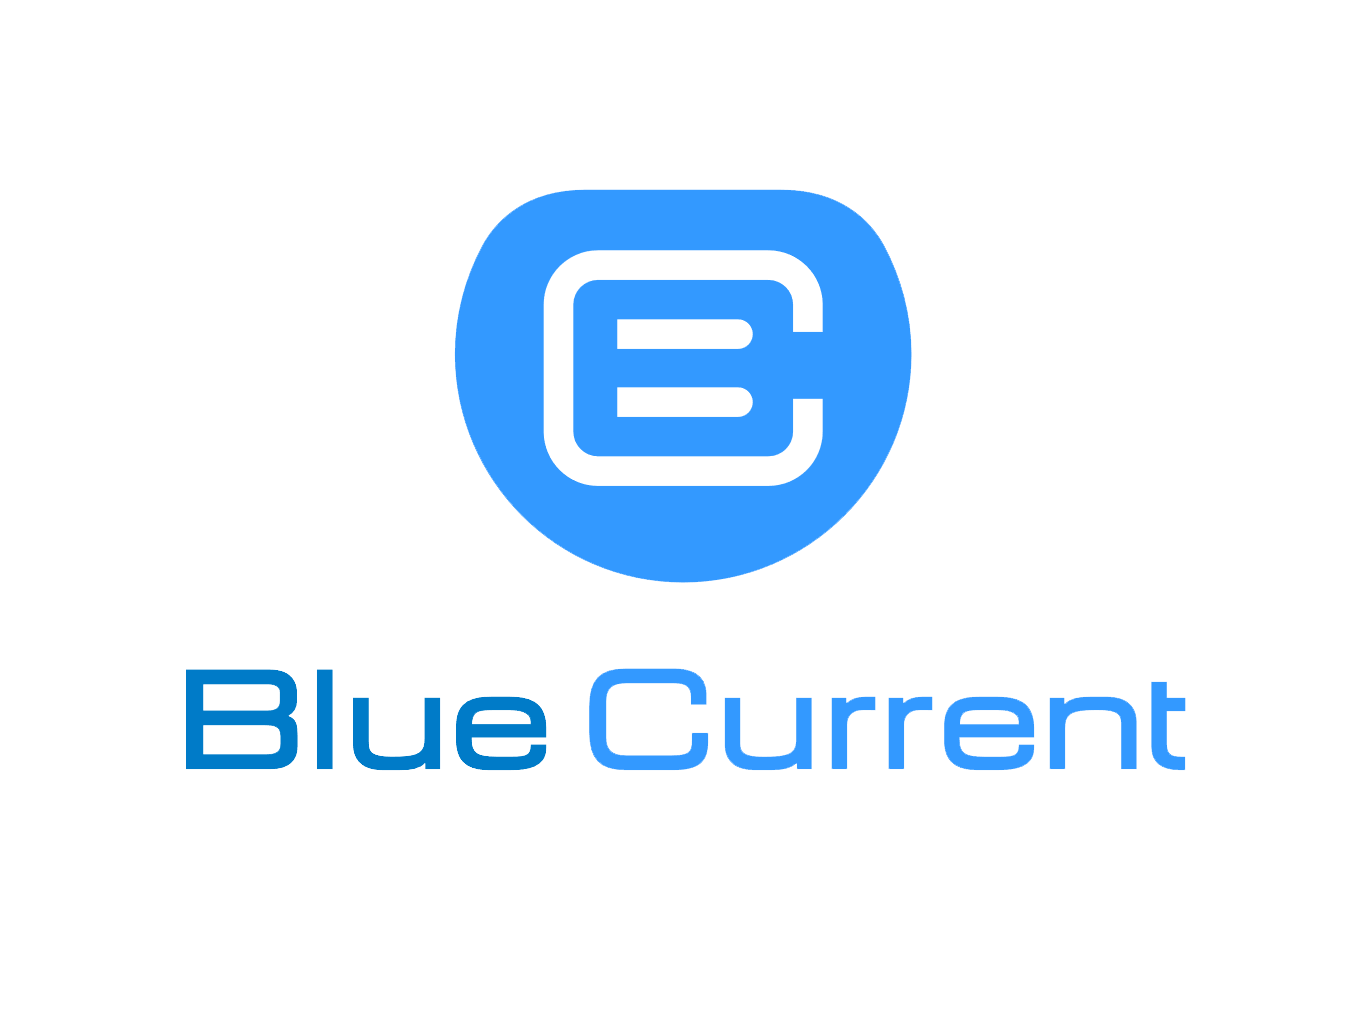 Blue current